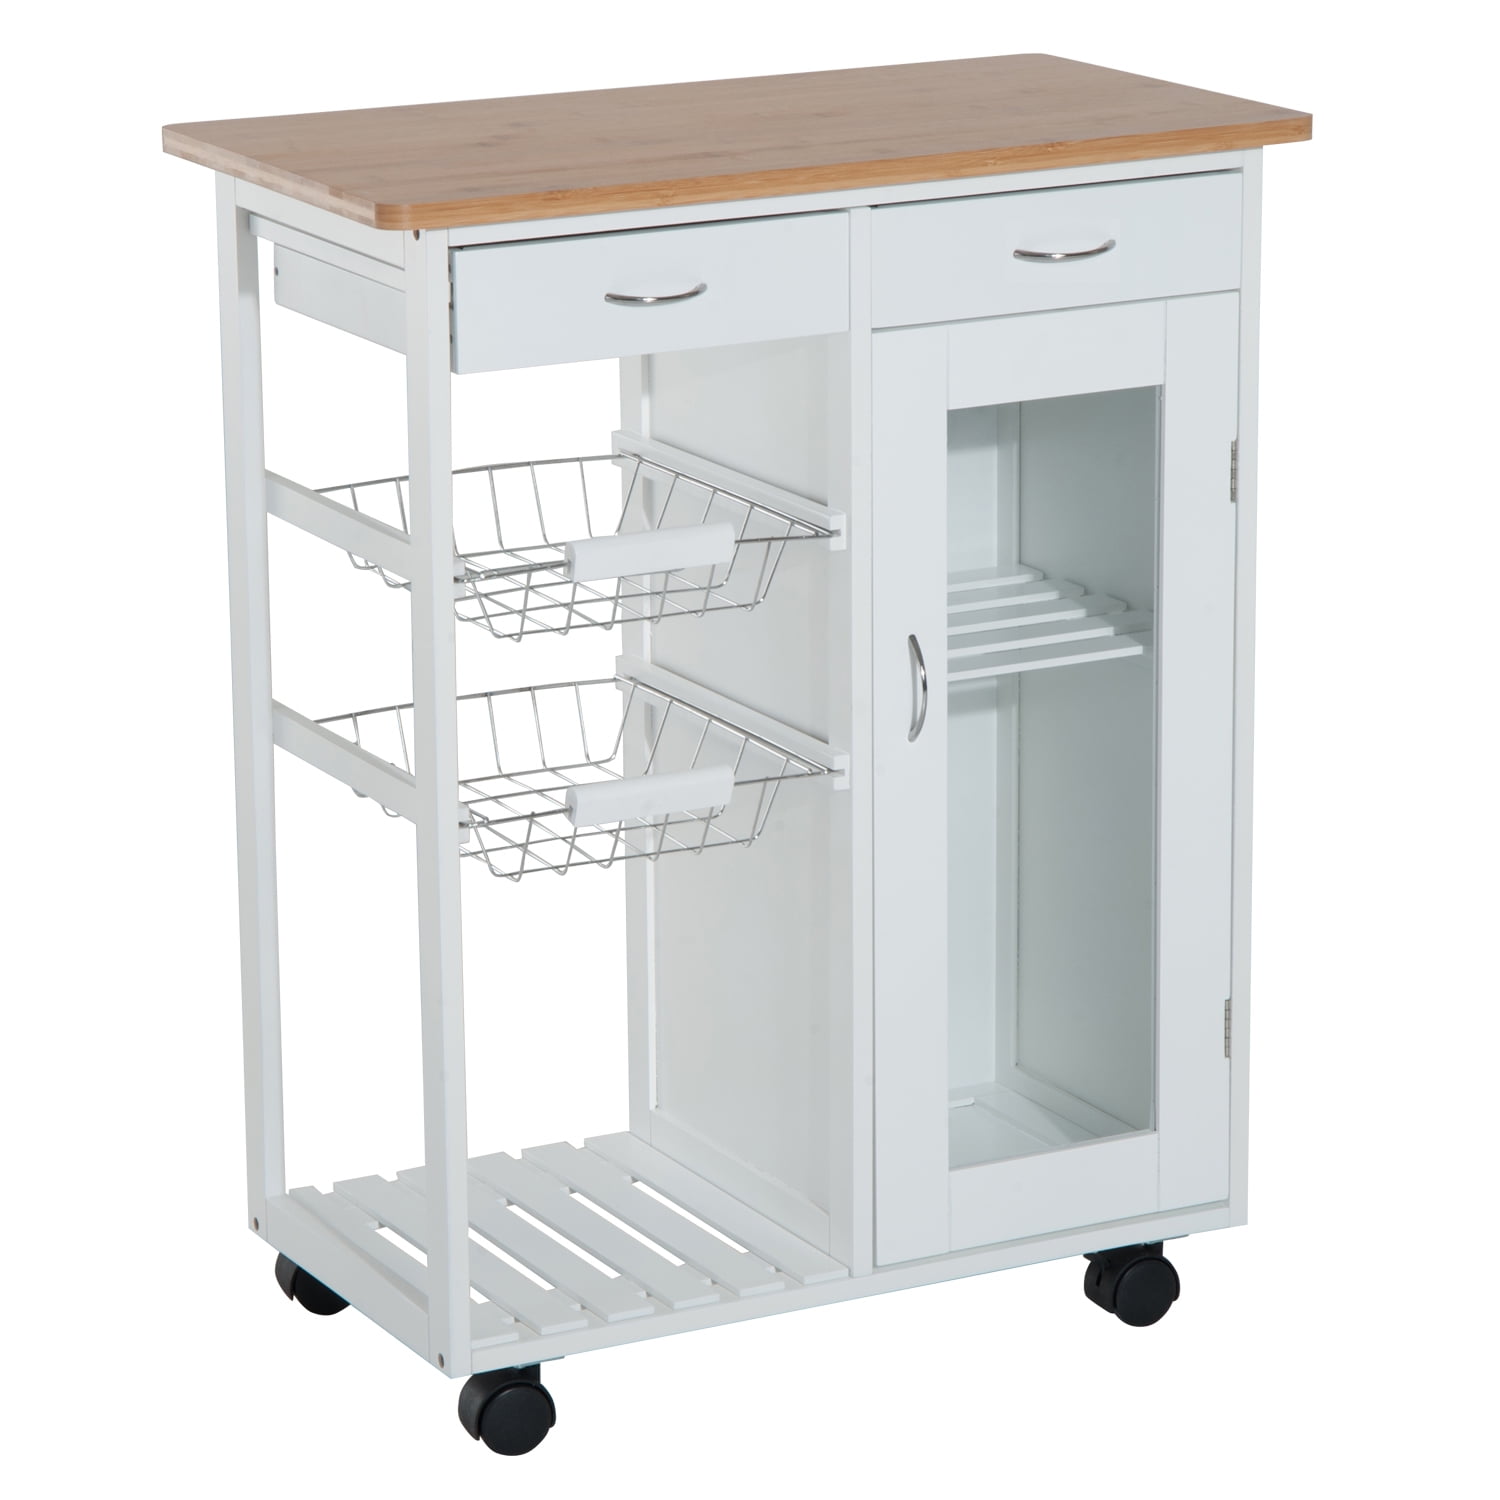 HOMCOM Rolling Kitchen Trolley Microwave Cart 2-Door Cabinet  Shelves Gray 